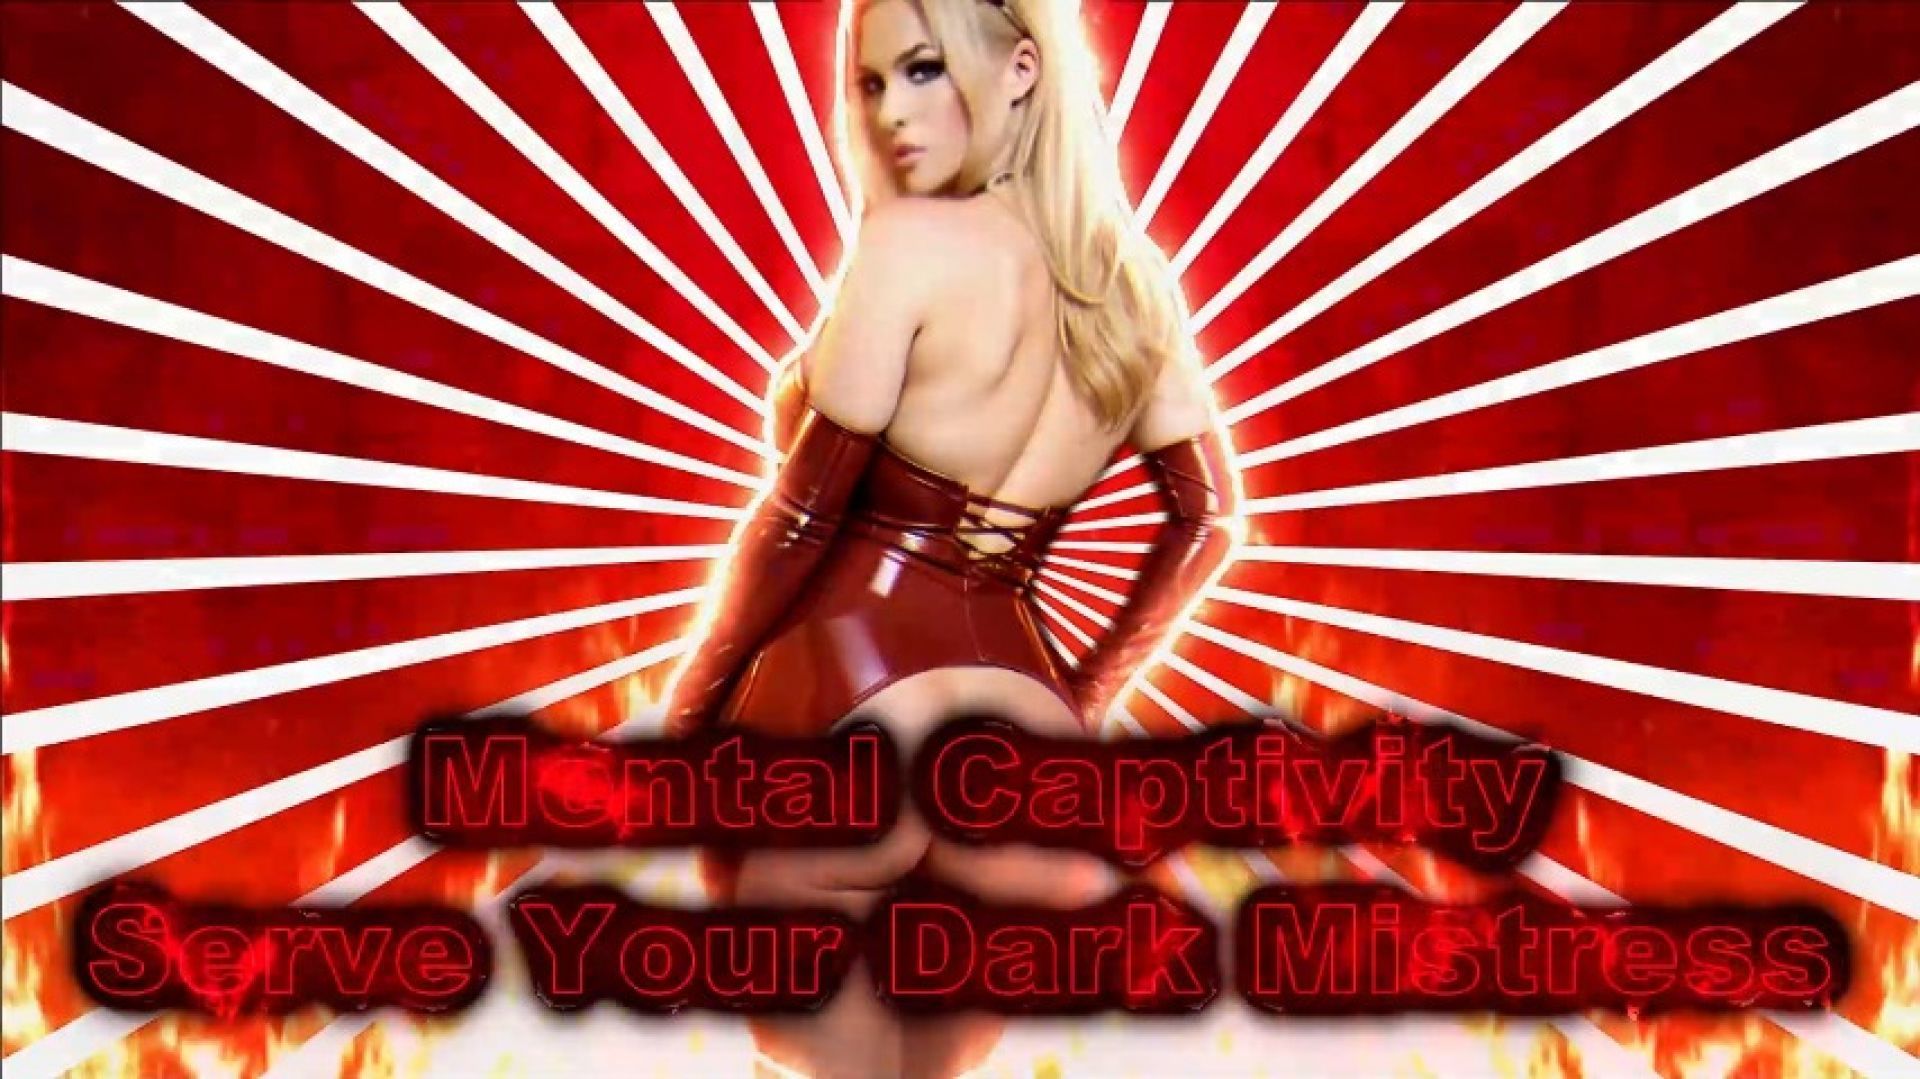 Mental Captivity: Serve Your Dark Mistress Psychosis Session